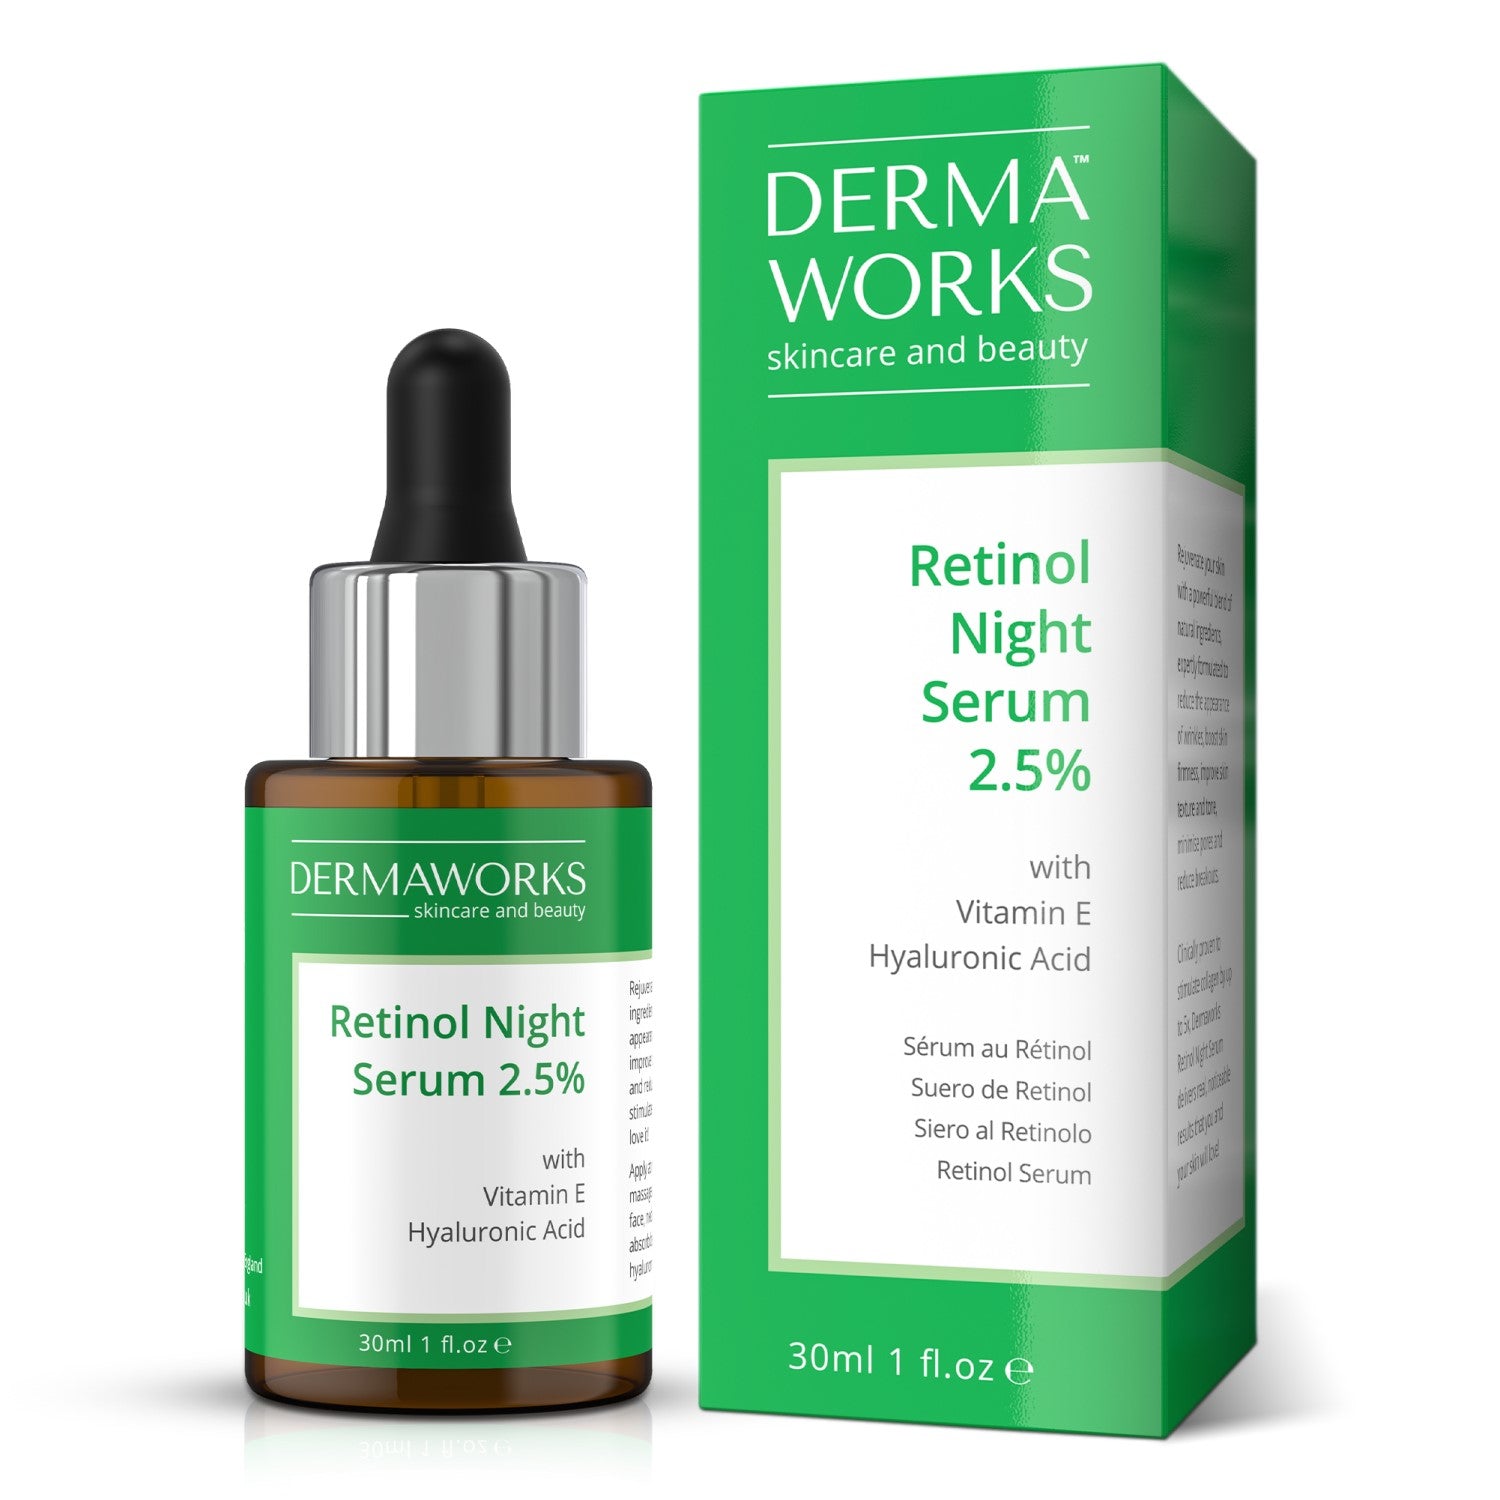 30ml bottle of Dermaworks resurfacing retinol serum with vitamin E, hyaluronic acid, jojoba oil and green tea extract.